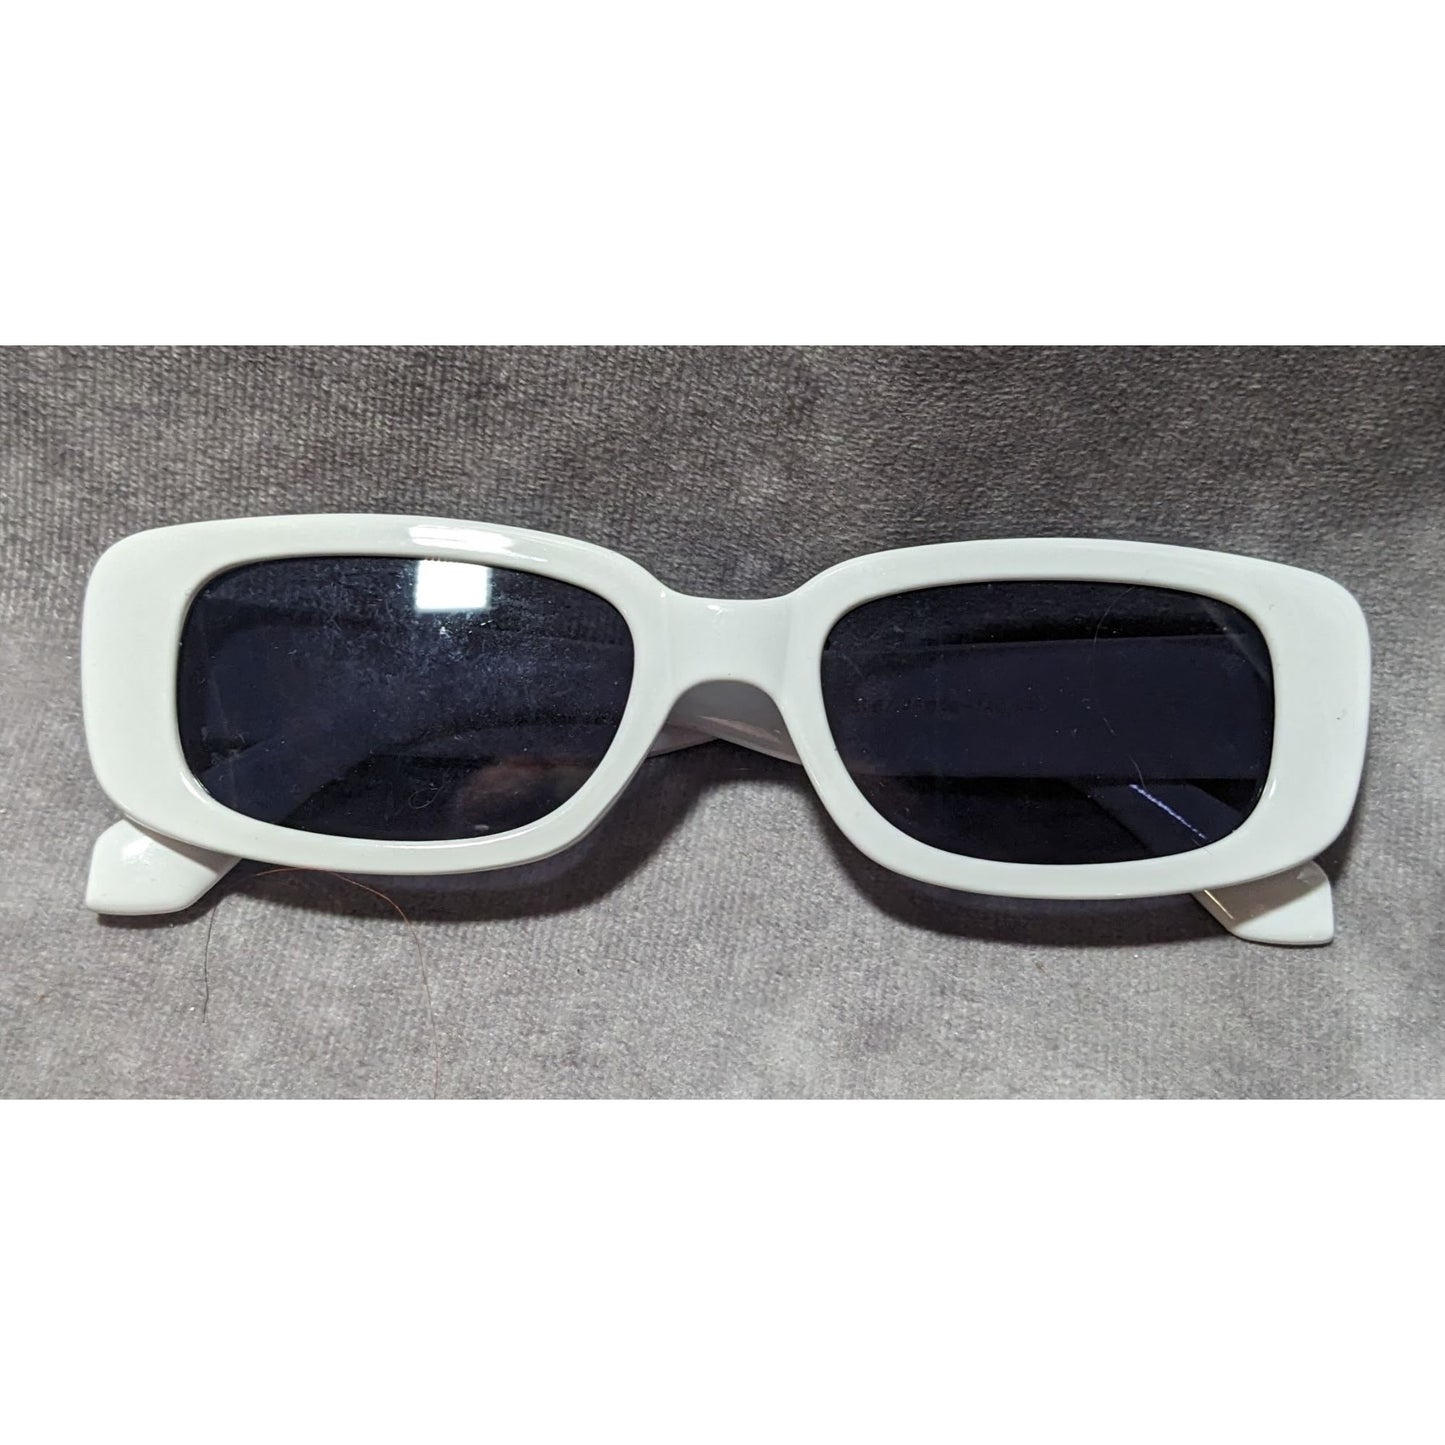 Retro White Rectangular Sunglasses